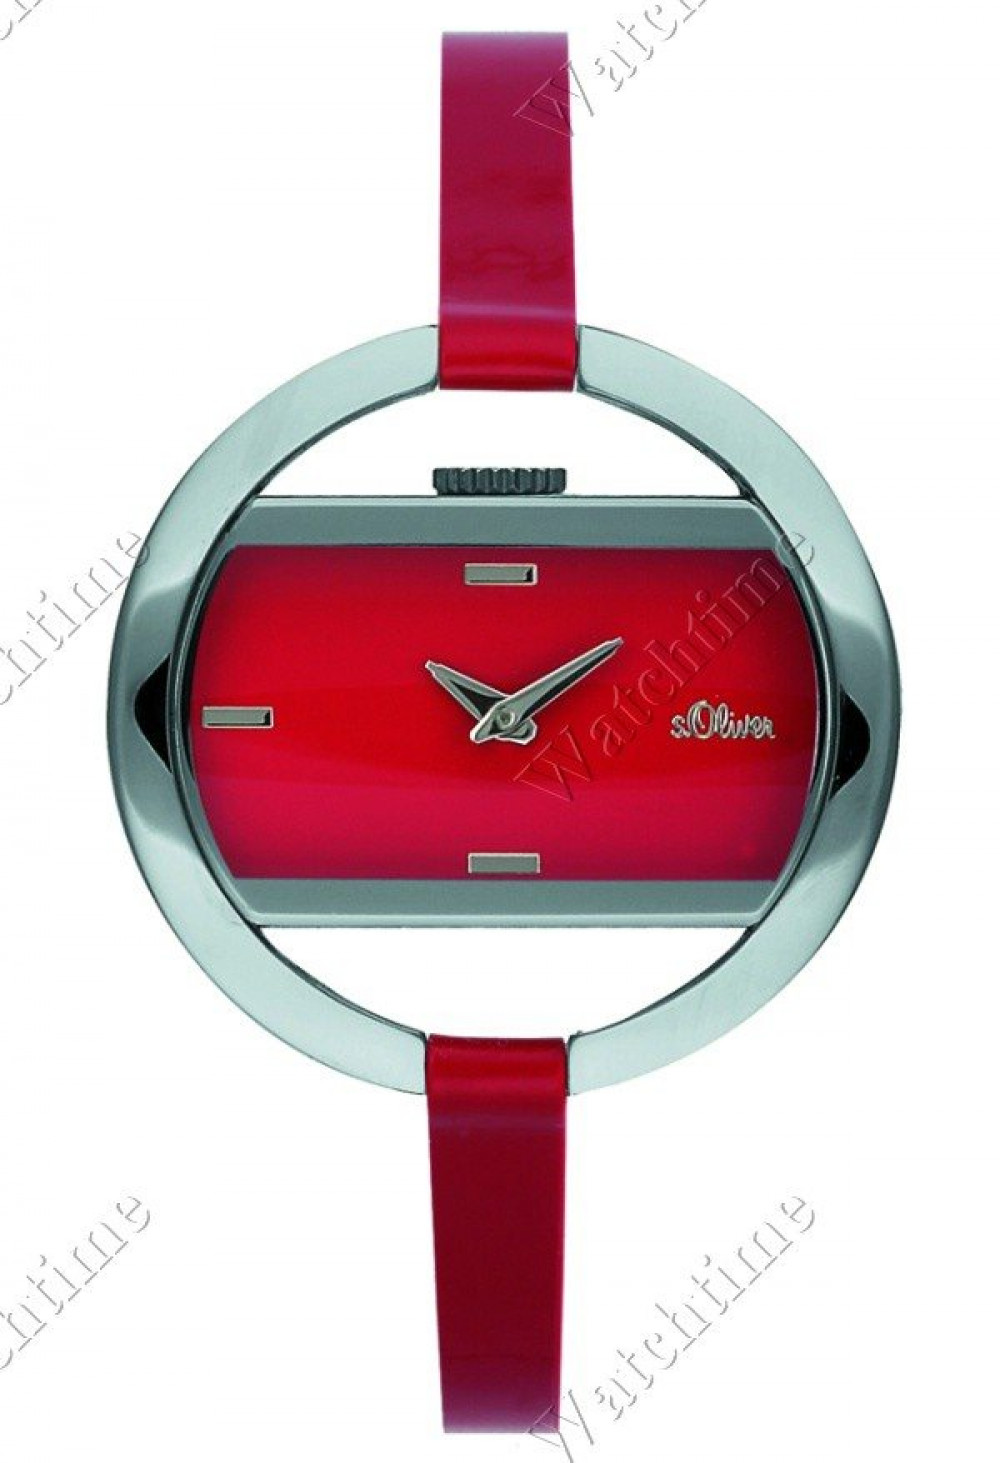 Zegarek firmy S.Oliver, model Orbit Red